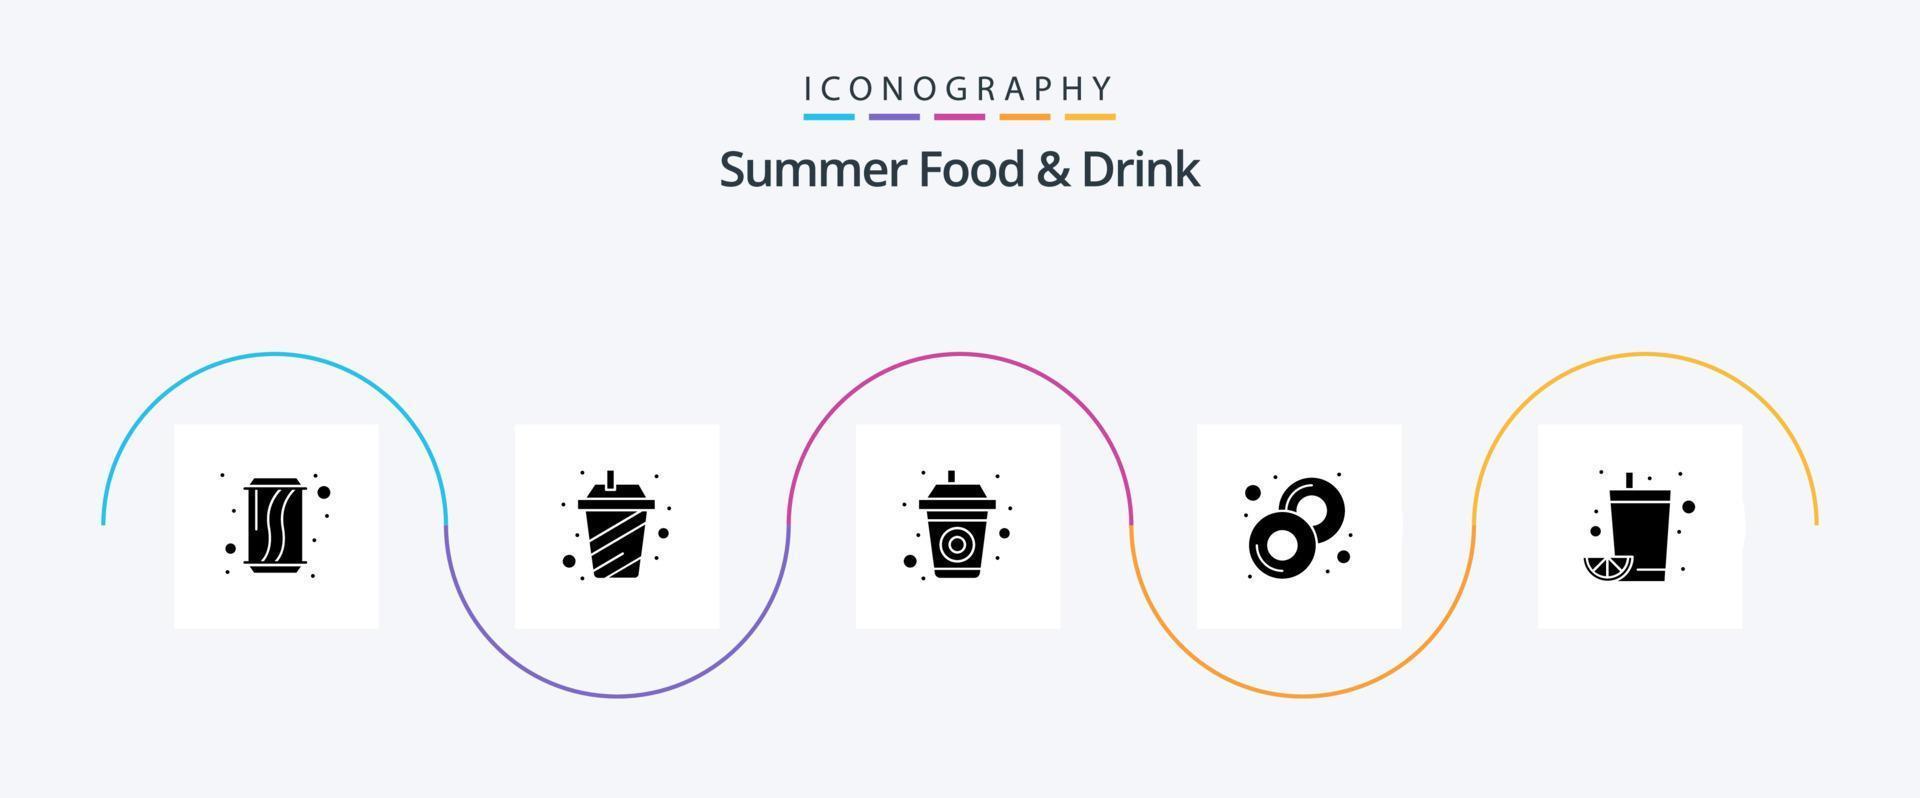 verano comida y bebida glifo 5 5 icono paquete incluso fruta. alimento. bebida. bocadillo. rosquilla vector